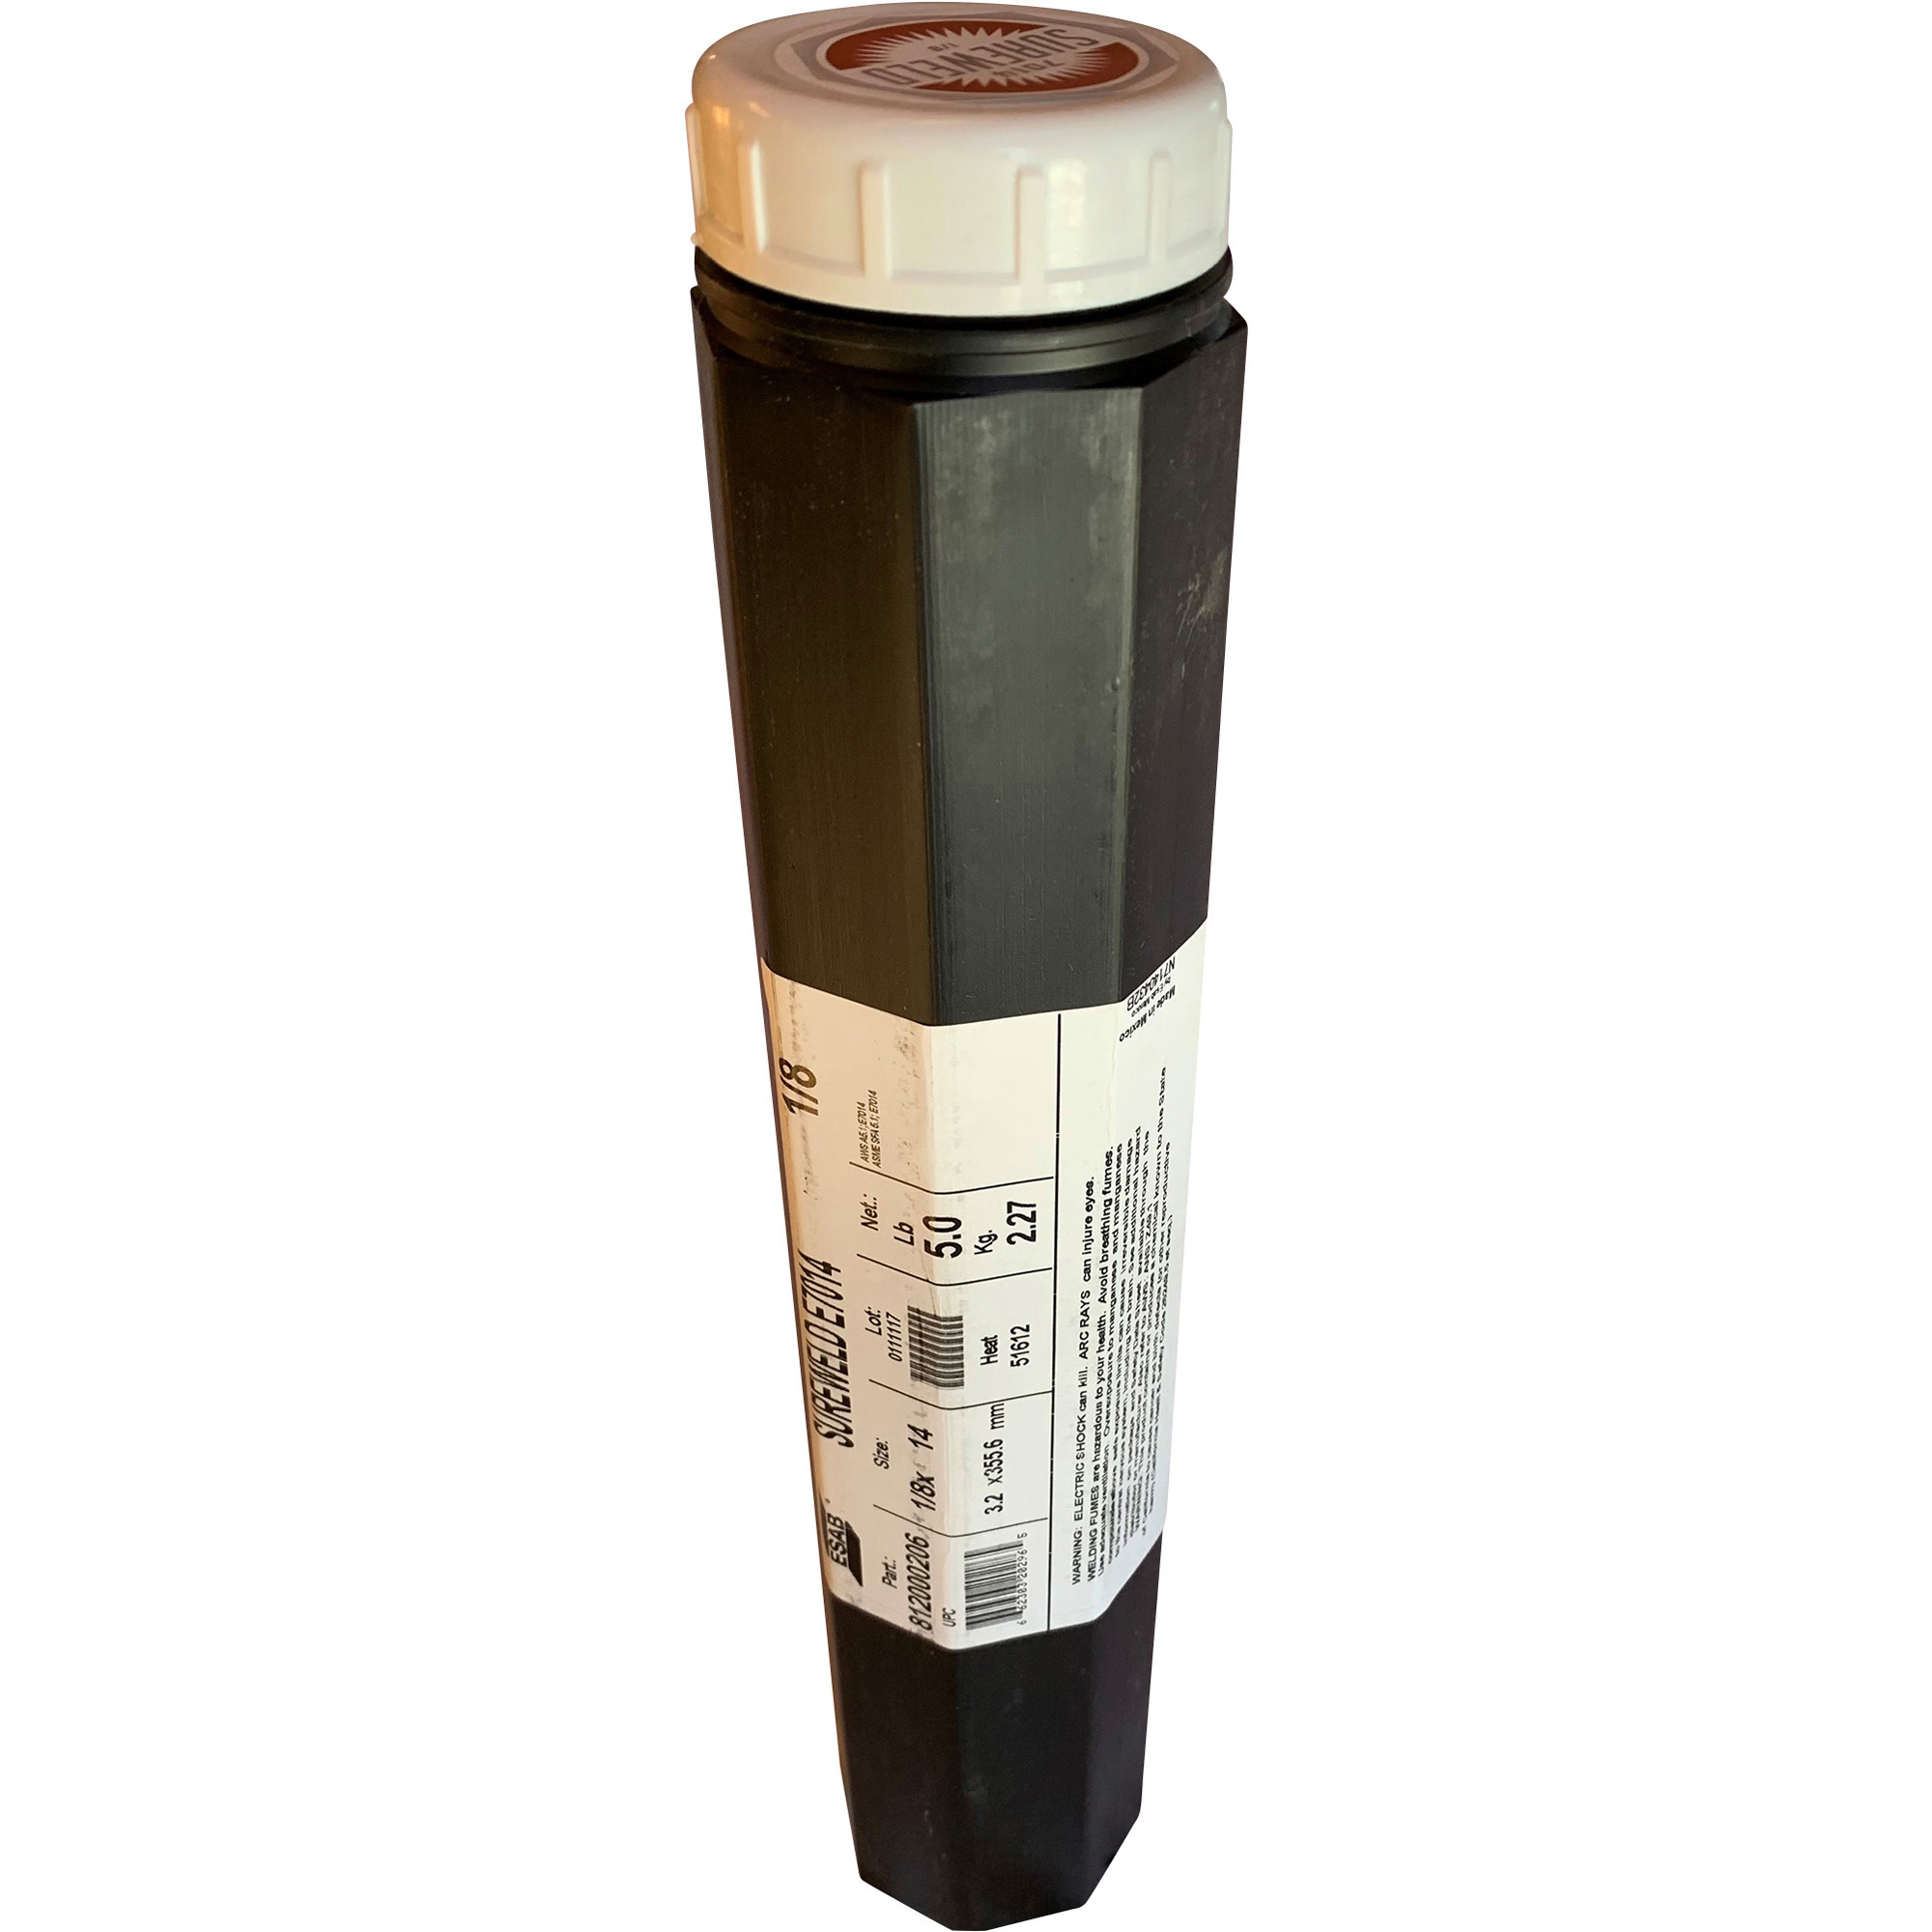 ESAB Sureweld 7014 Stick Electrodes â 1/8Inch Diameter x 14Inch L, 5-Lb. Tube, Model 812000206